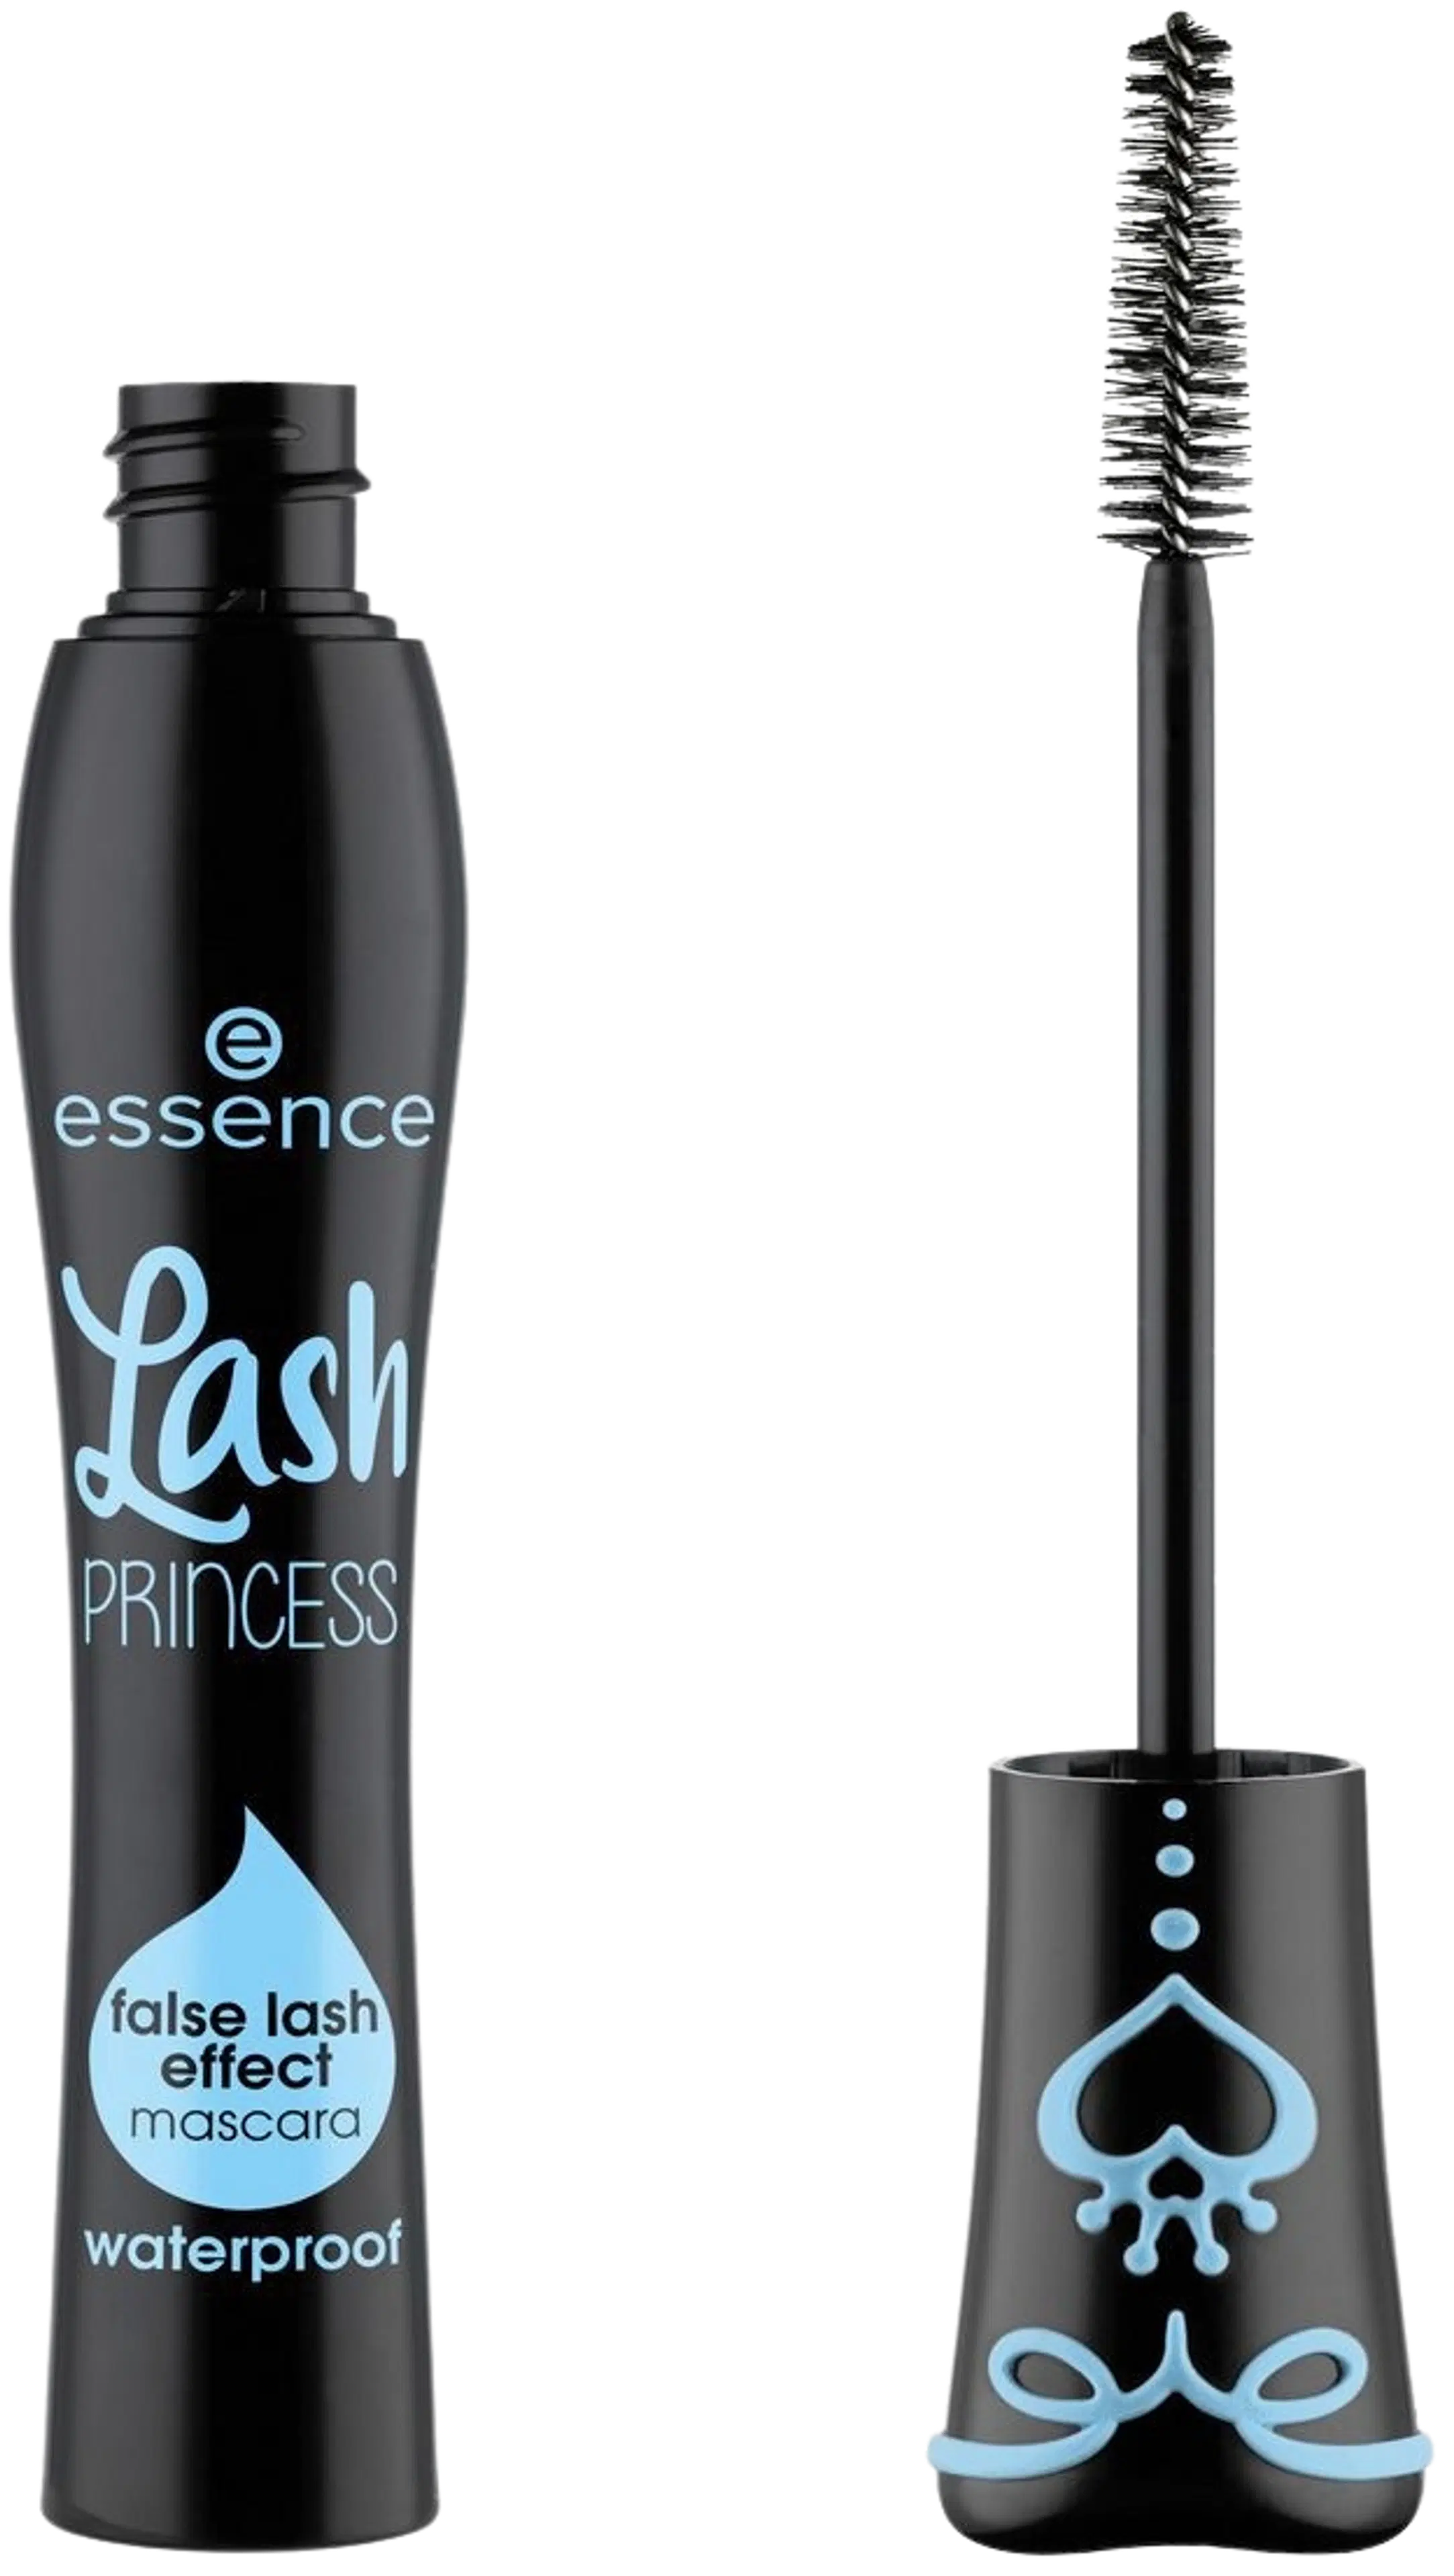 essence Lash PRINCESS false lash effect mascara waterproof vedenkestävä ripsiväri 12 ml